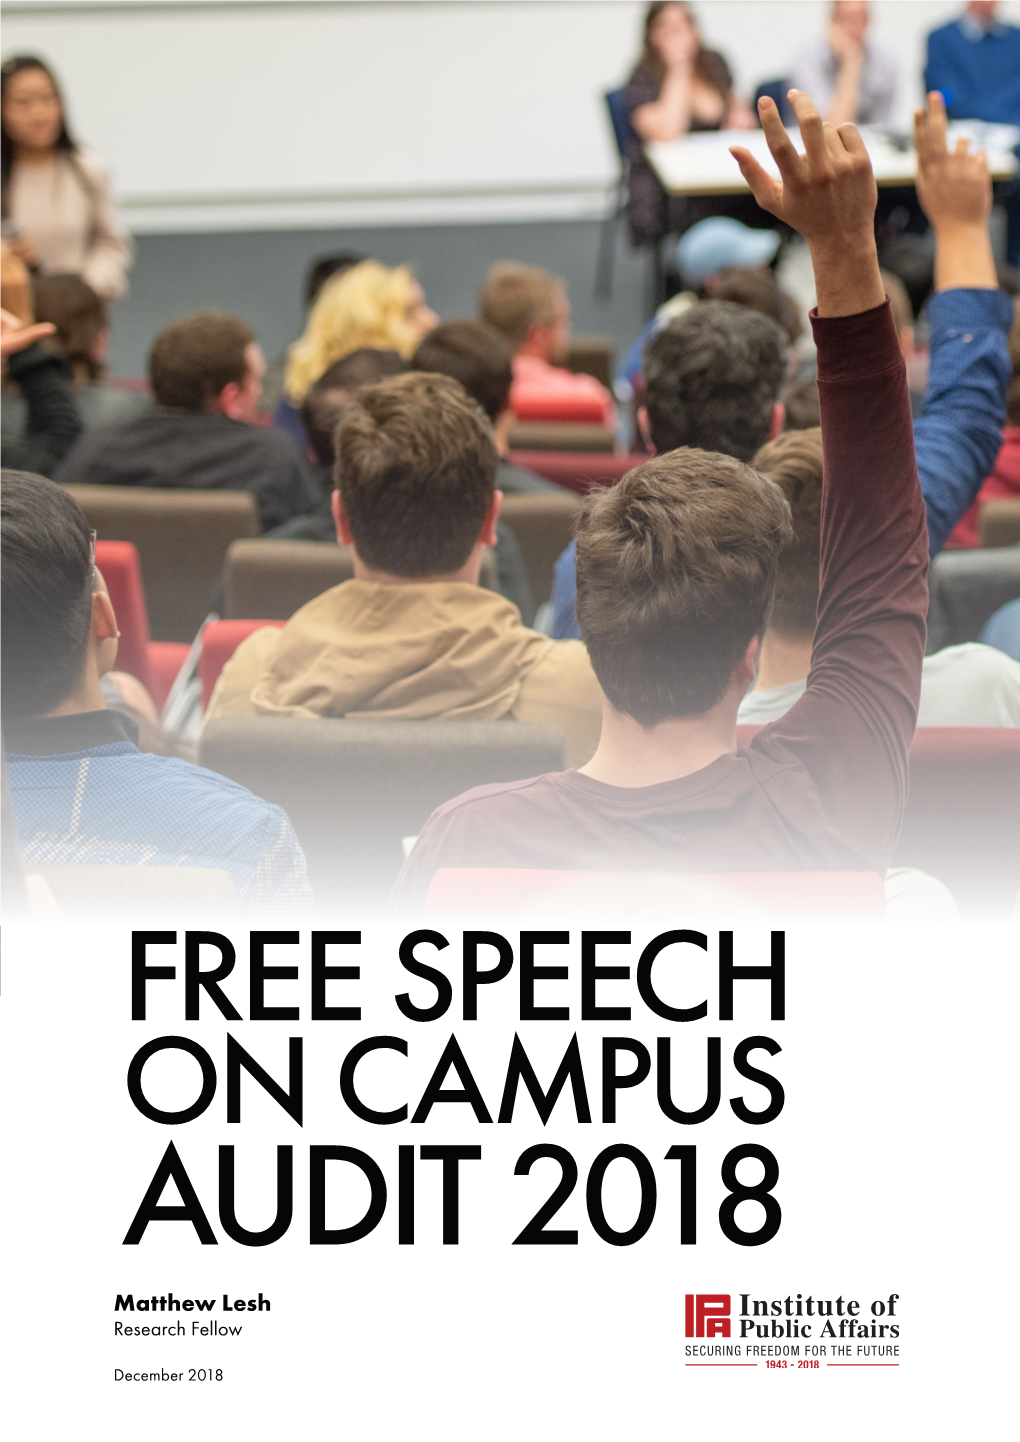 FREE SPEECH on CAMPUS AUDIT 2018 Matthew Lesh Research Fellow